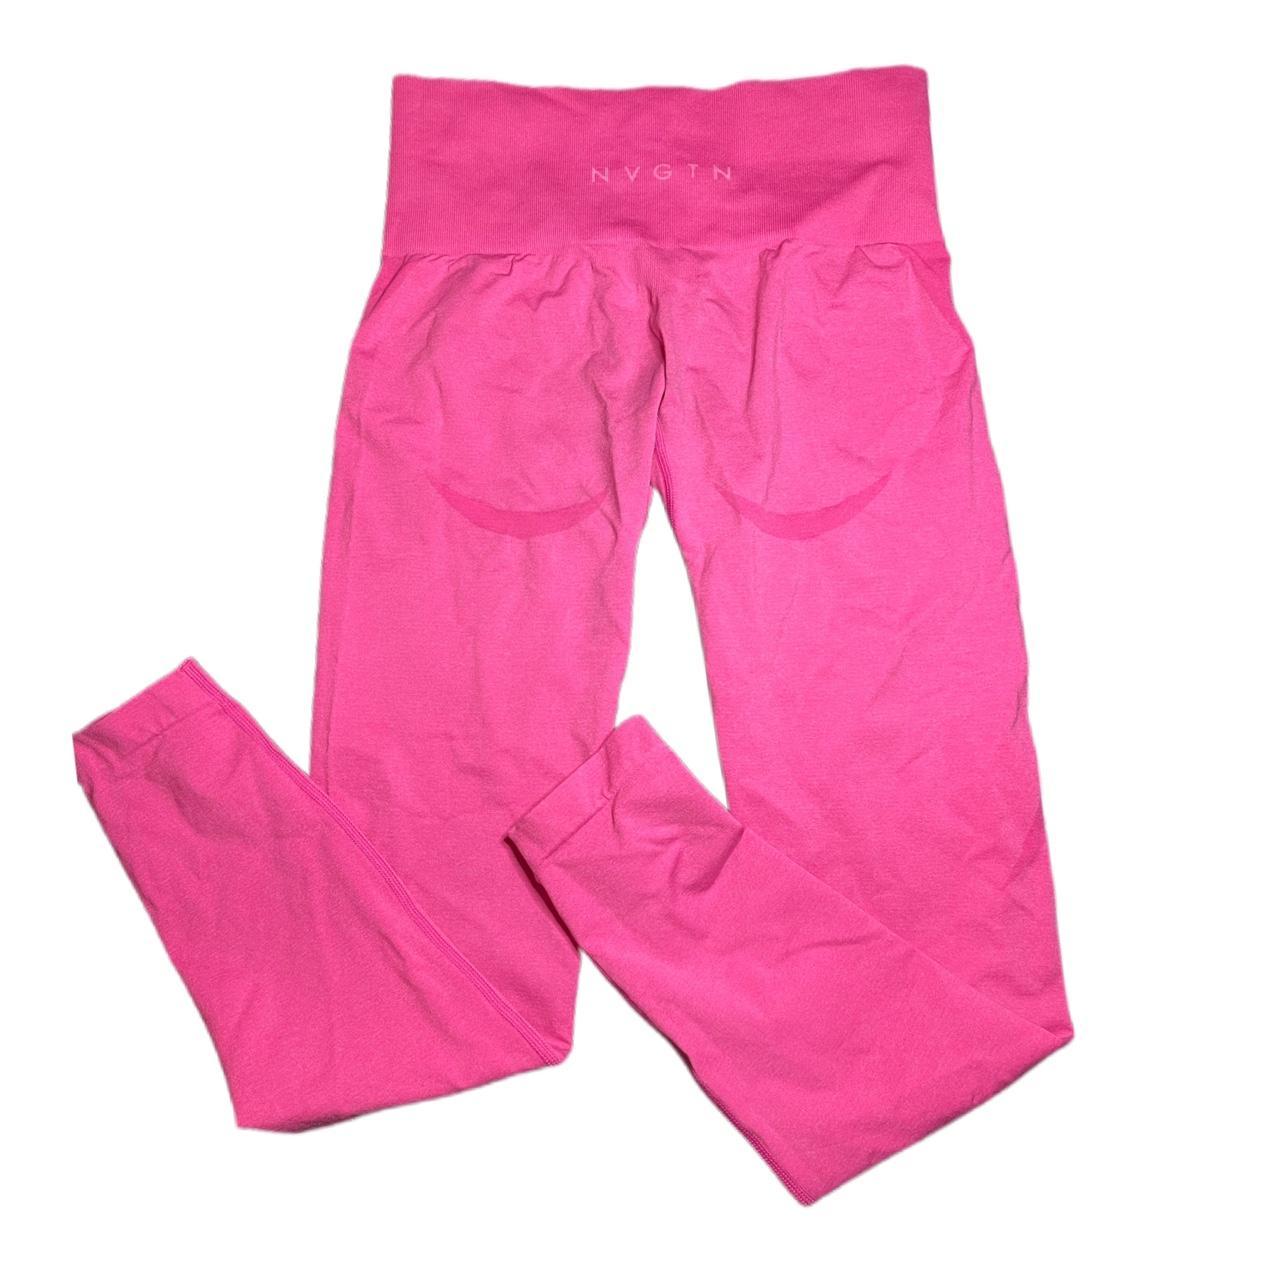 NVGTN Leggings Size small, bright pink color w/ - Depop